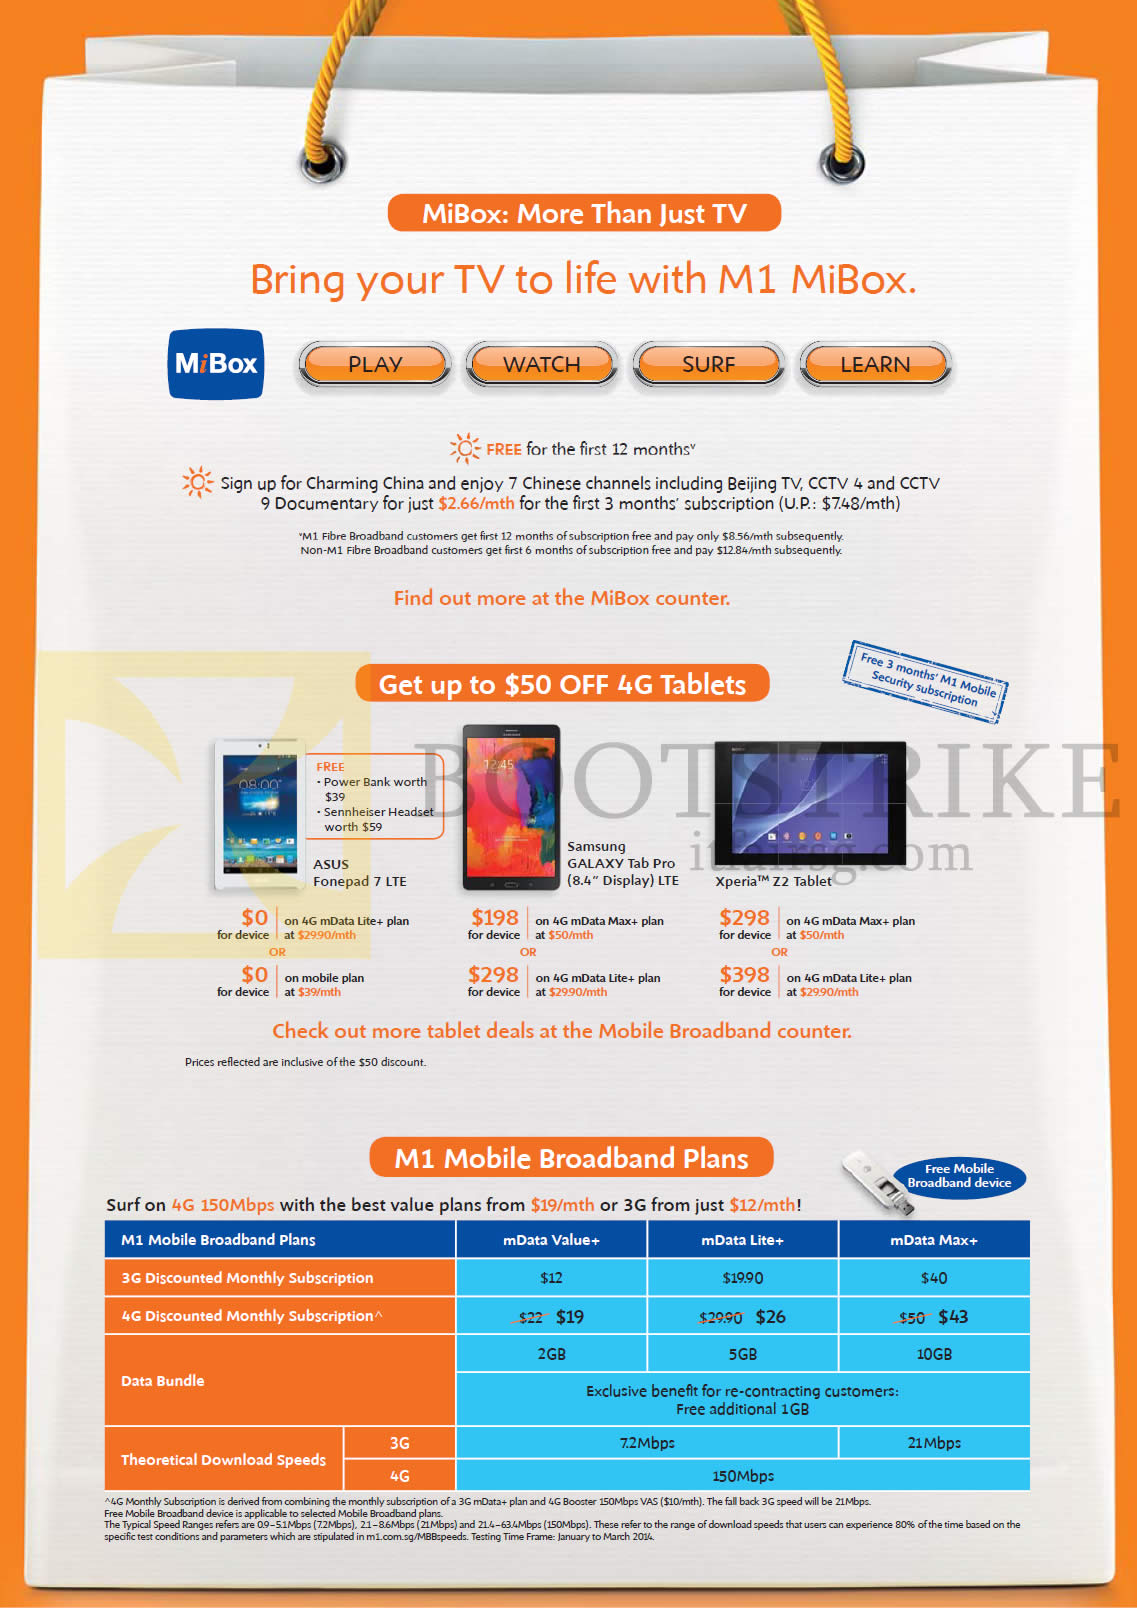 PC SHOW 2014 price list image brochure of M1 MiBox TV, Mobile Broadband ASUS FonePad 7, Samsung Galaxy Tab Pro 8.4, Sony Xperia Z2, MDada Value Lite Max Plus